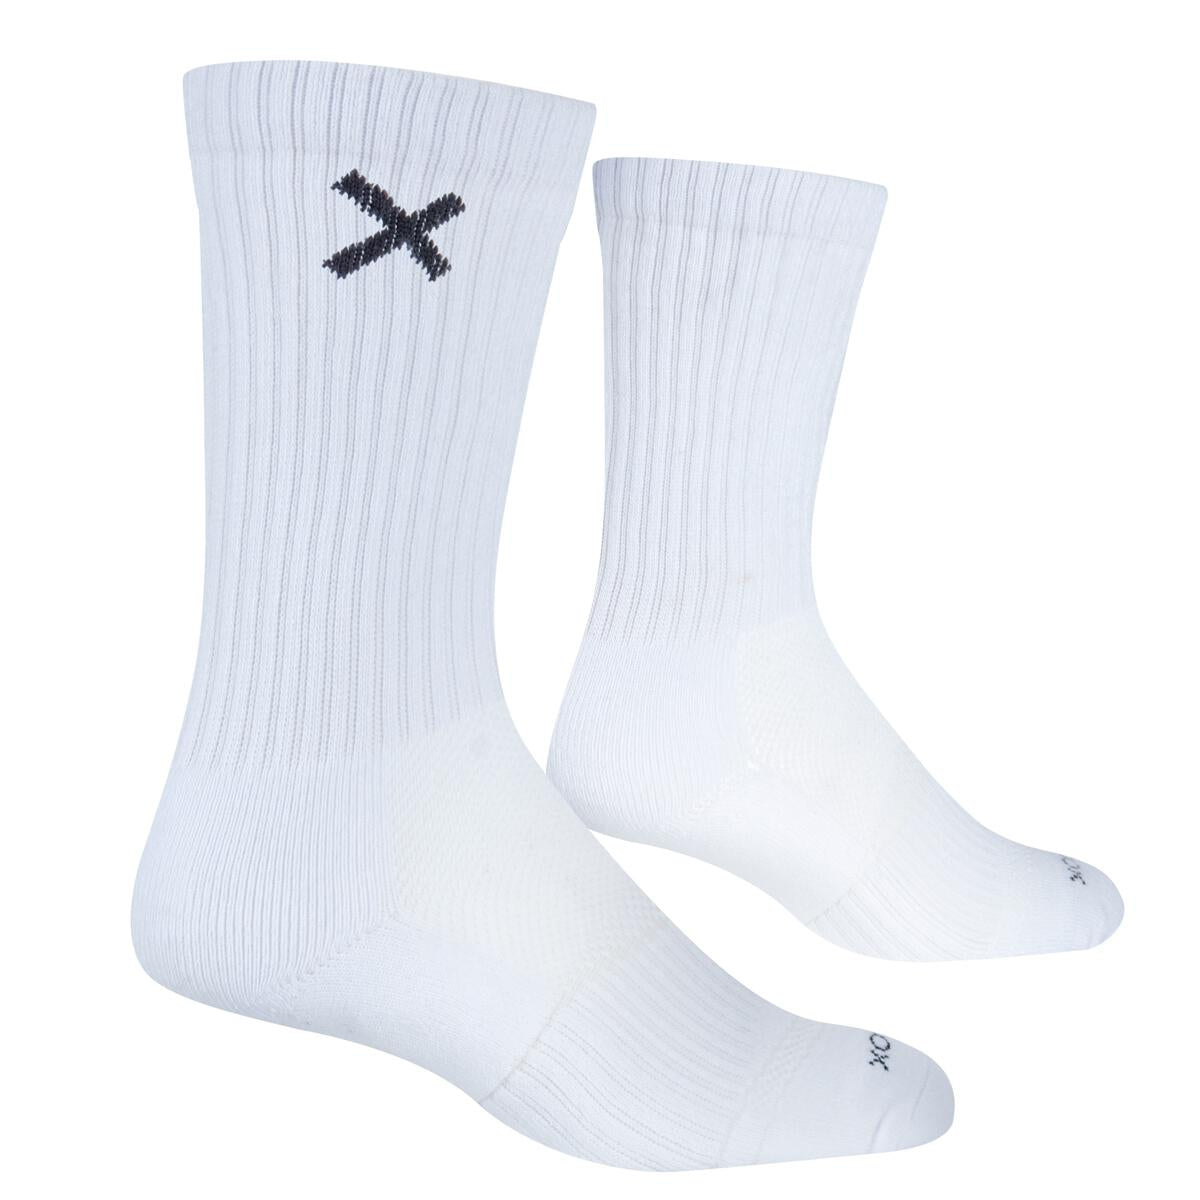 Odd Sox “Basix 3 Pack” Socks (White)